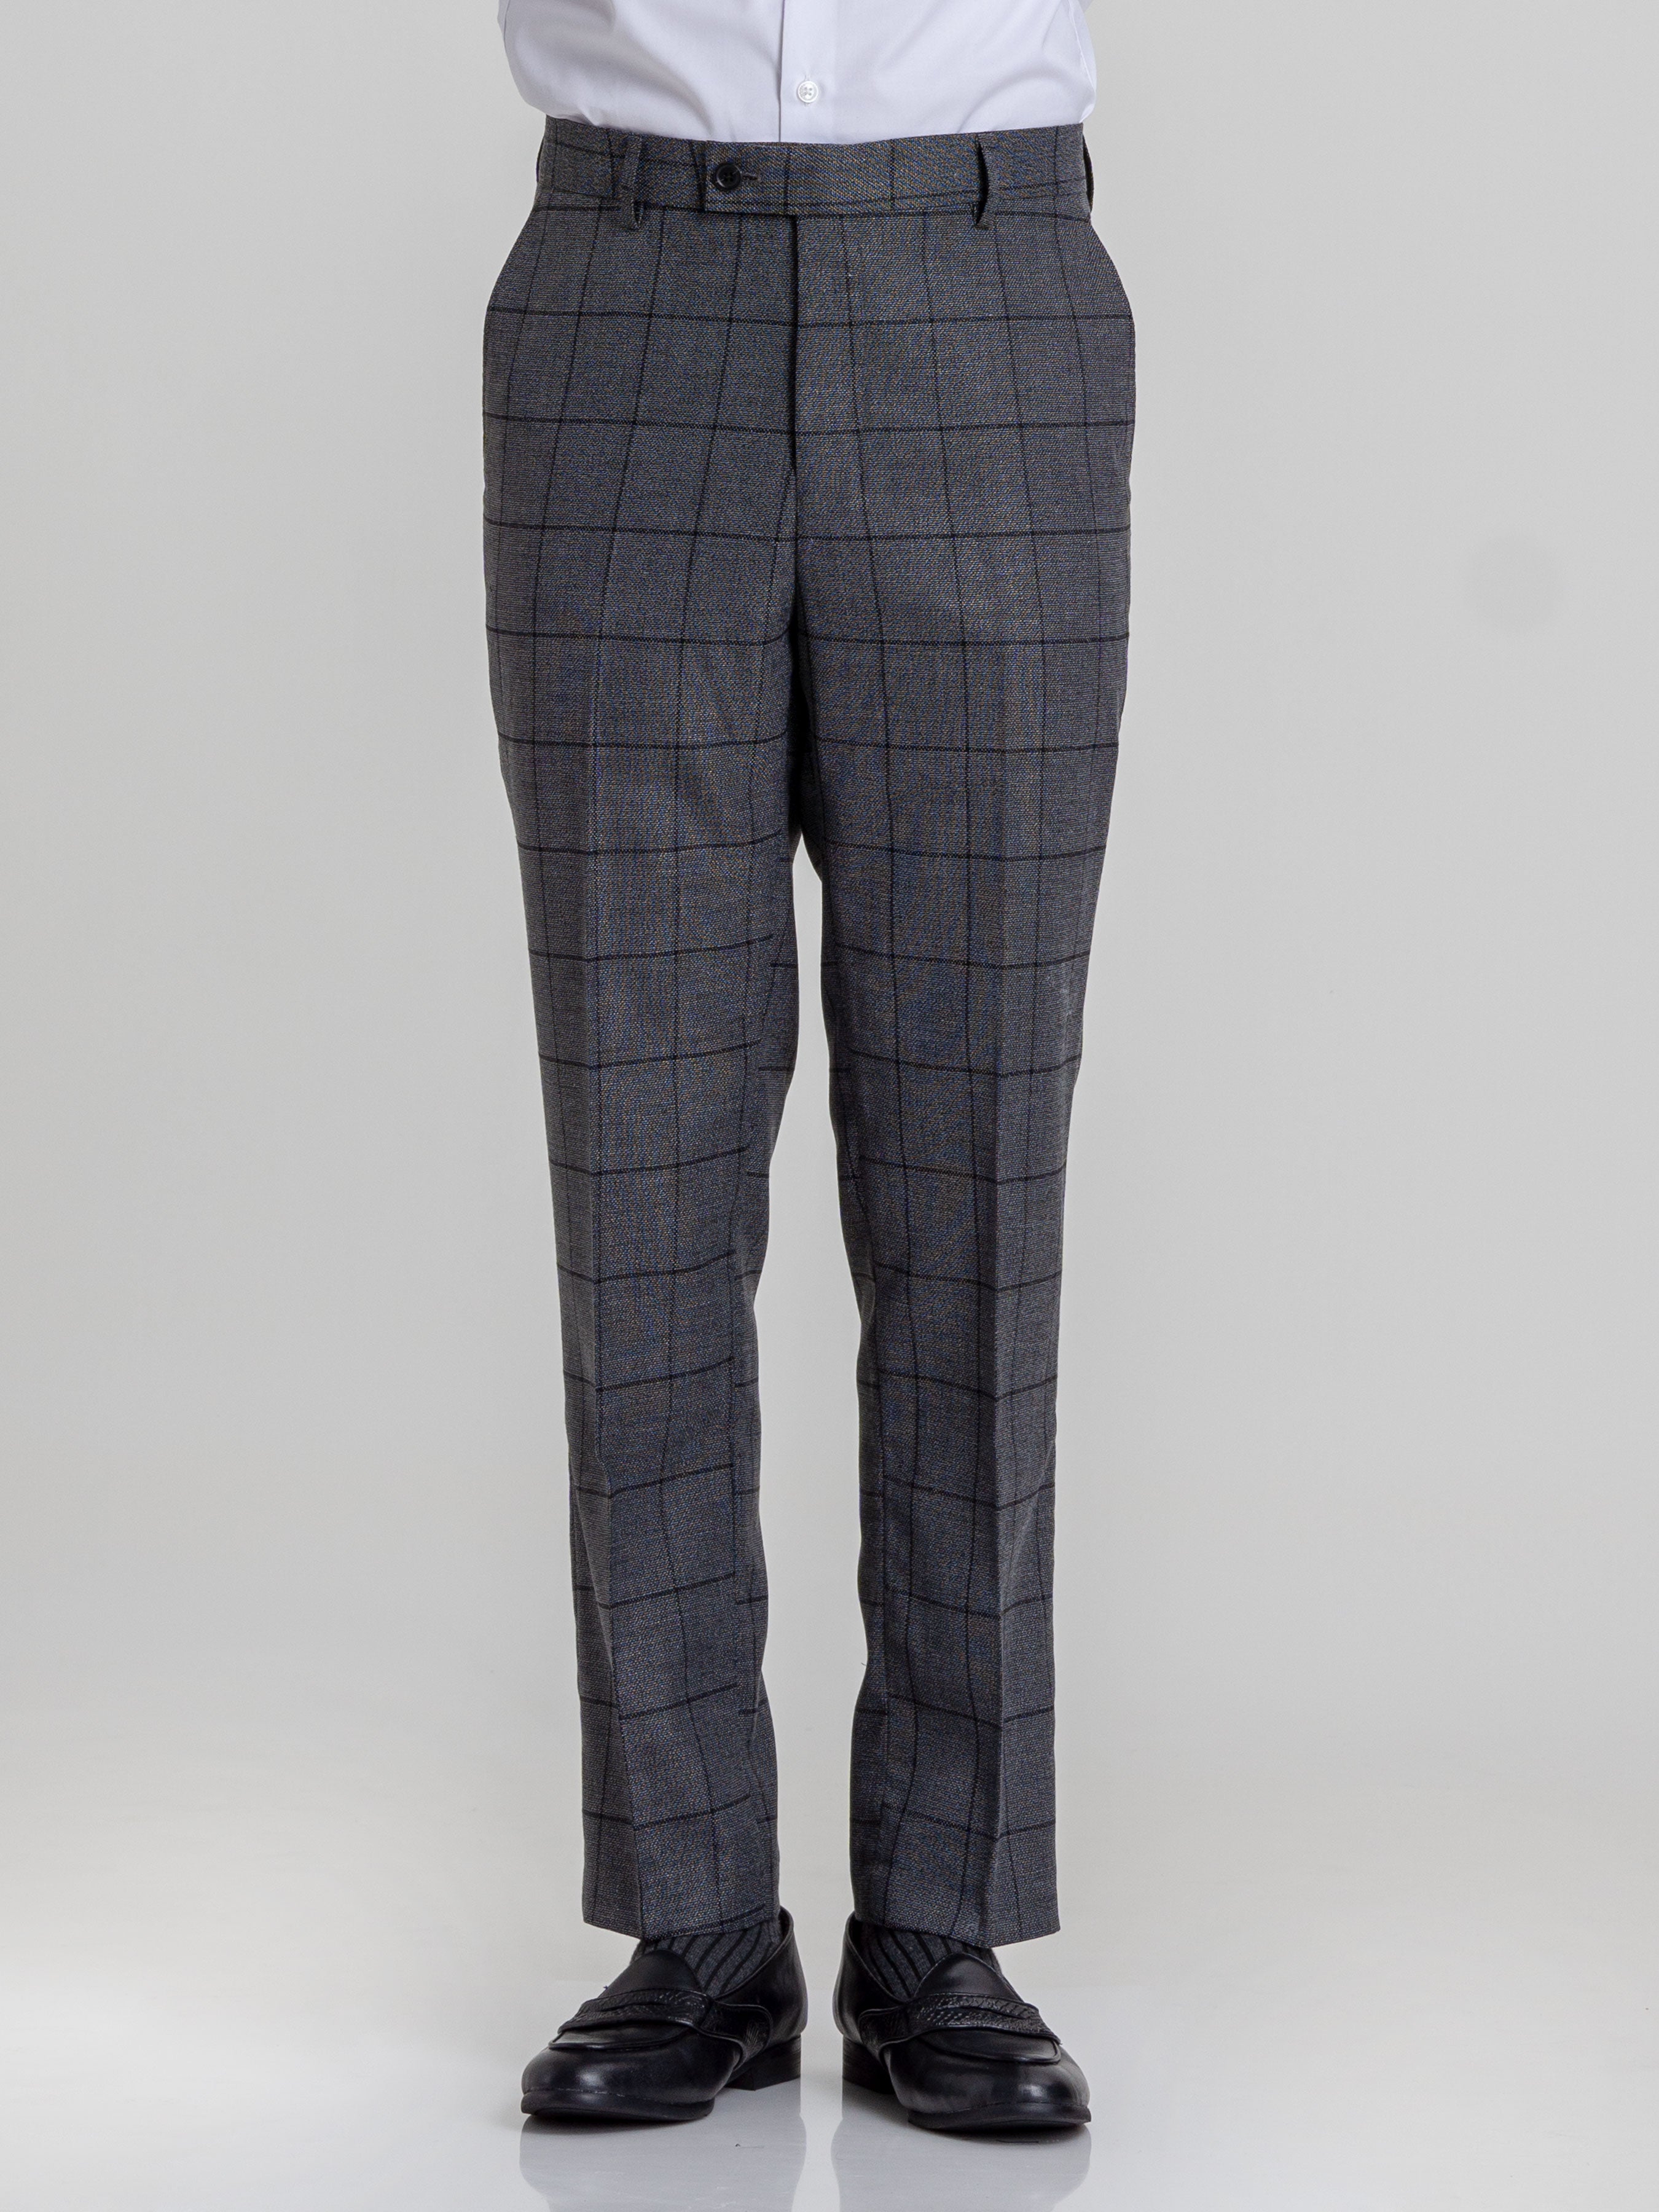 Buy Regular Trouser Pants Gray Black and Navy Blue Combo of 3